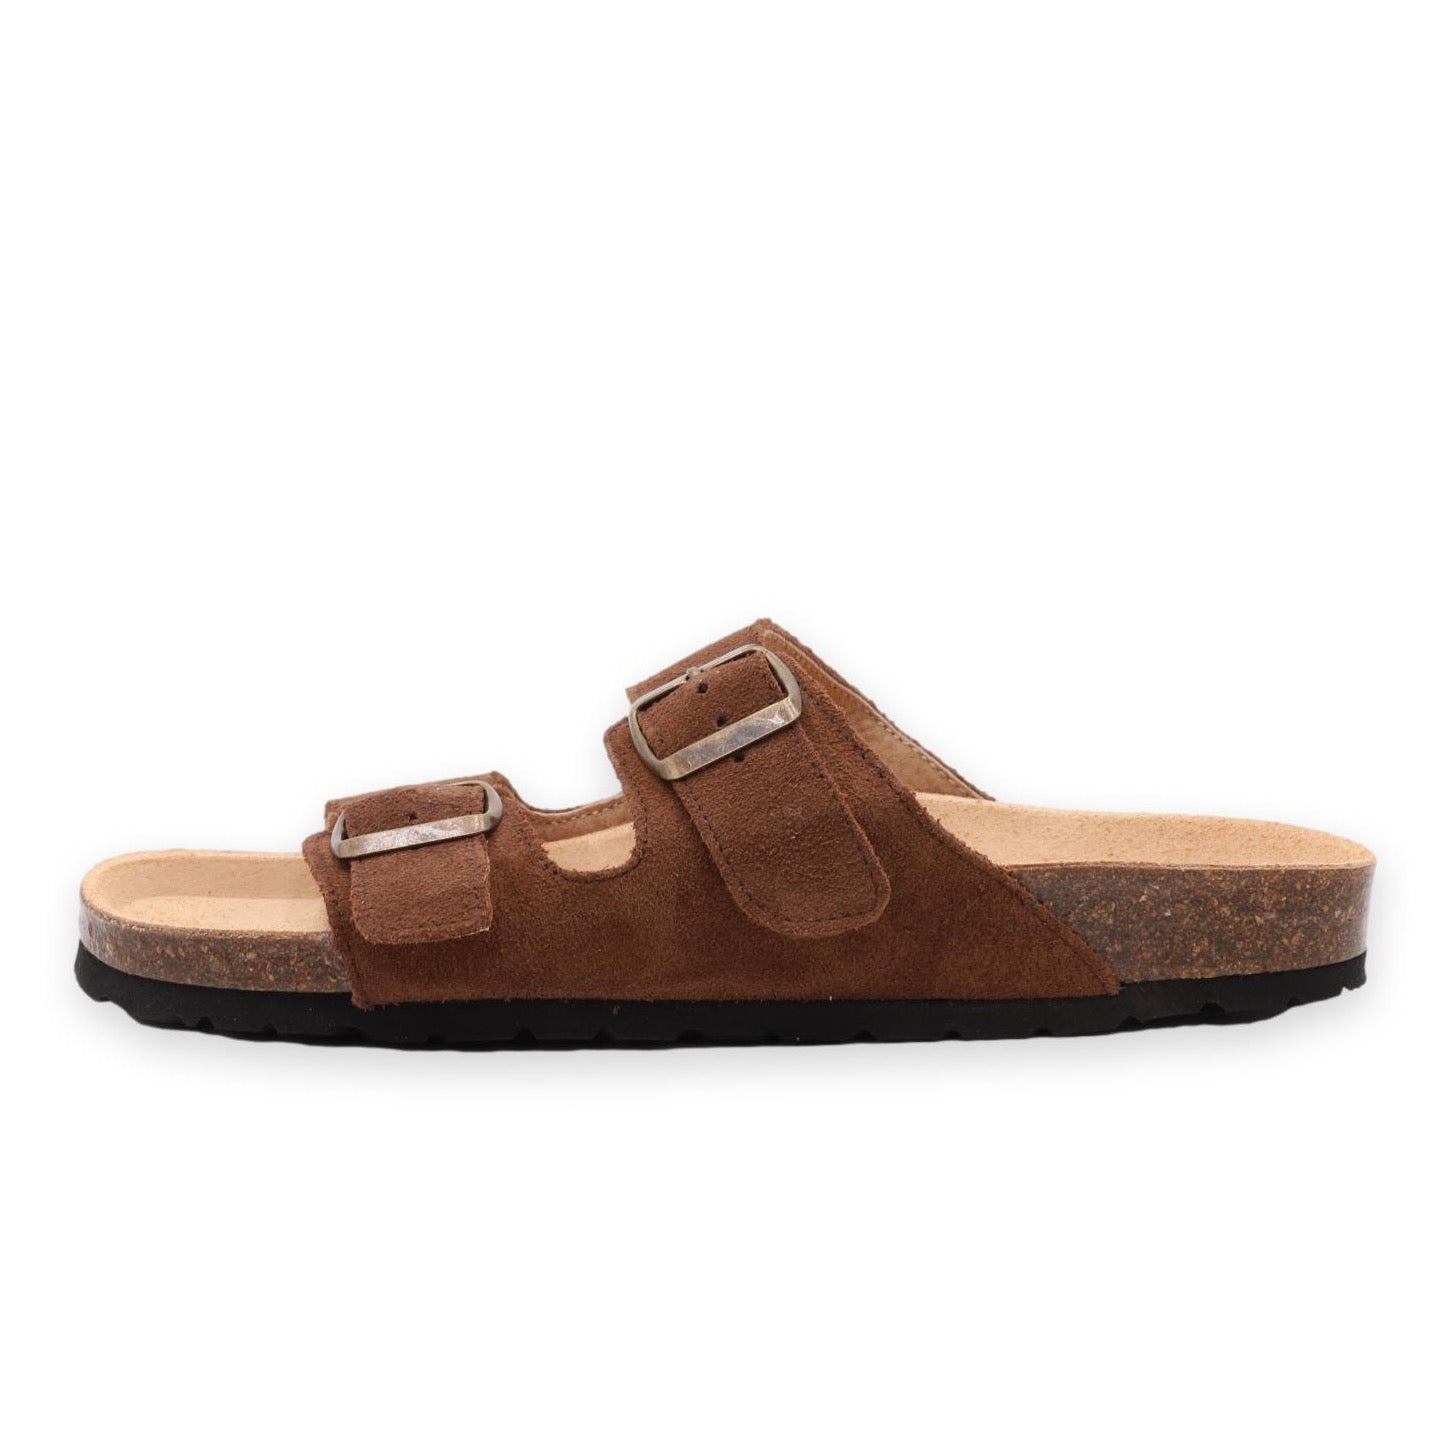 Nordic Chesnut sandals